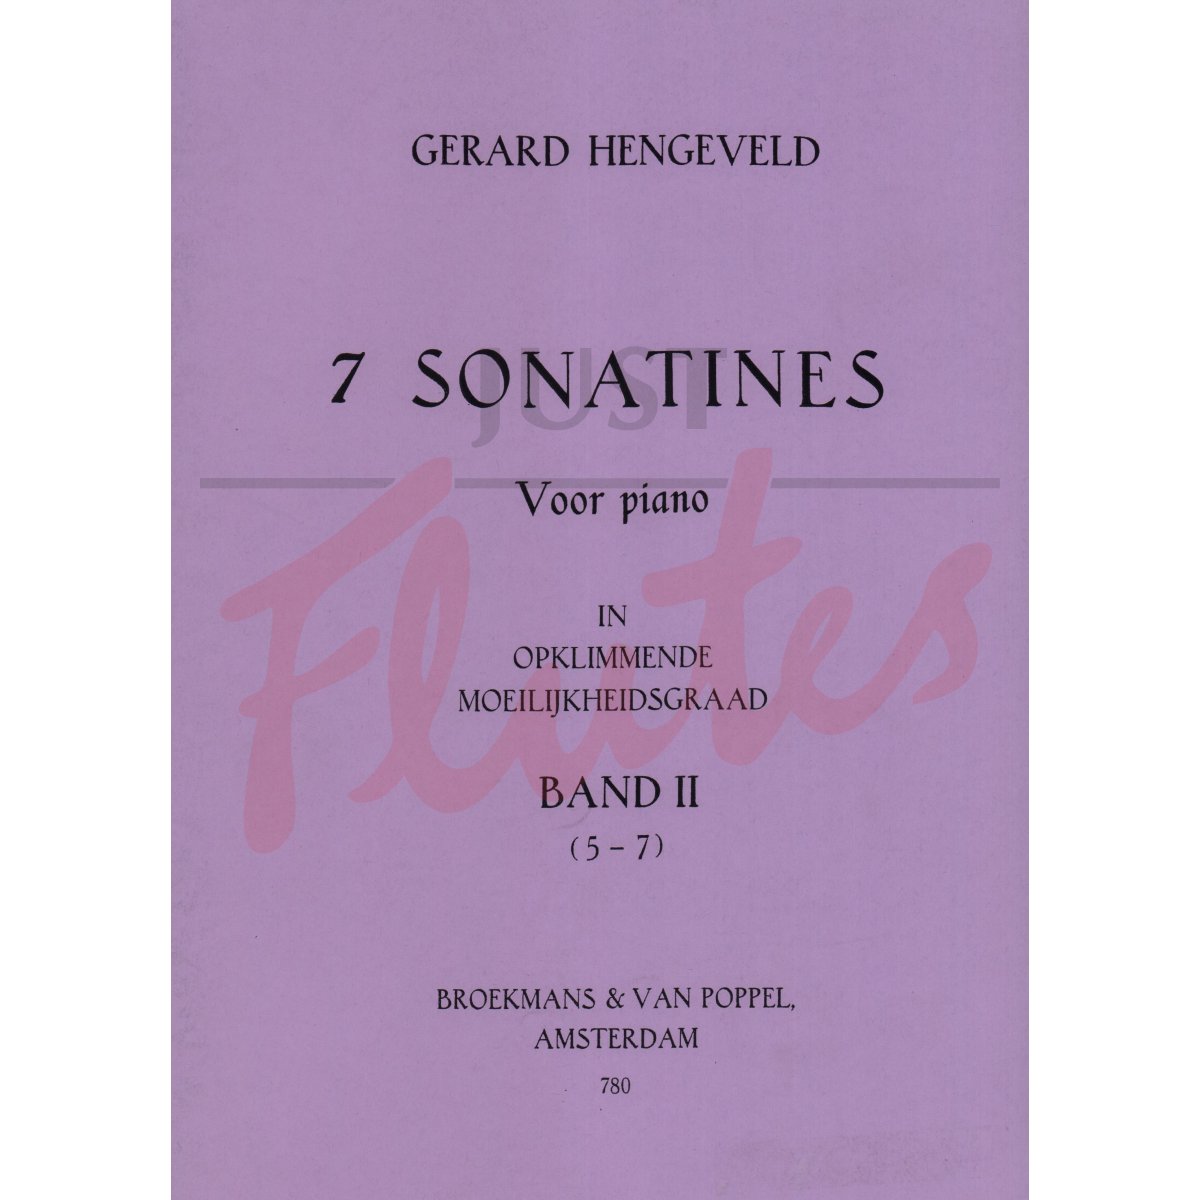 7 Sonatinas for Piano, Vol 2